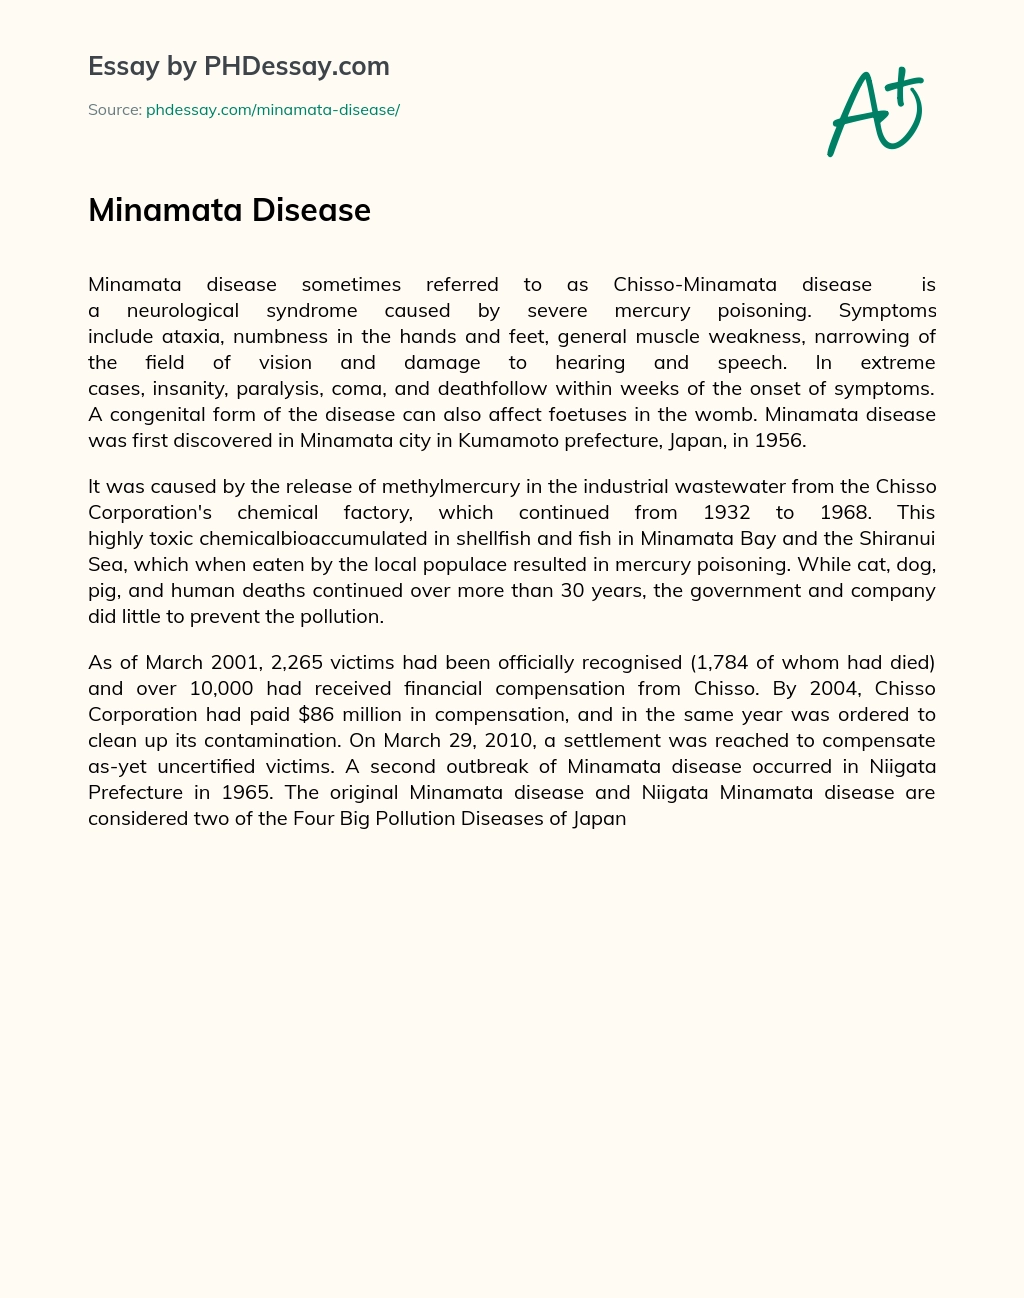 Minamata Disease essay